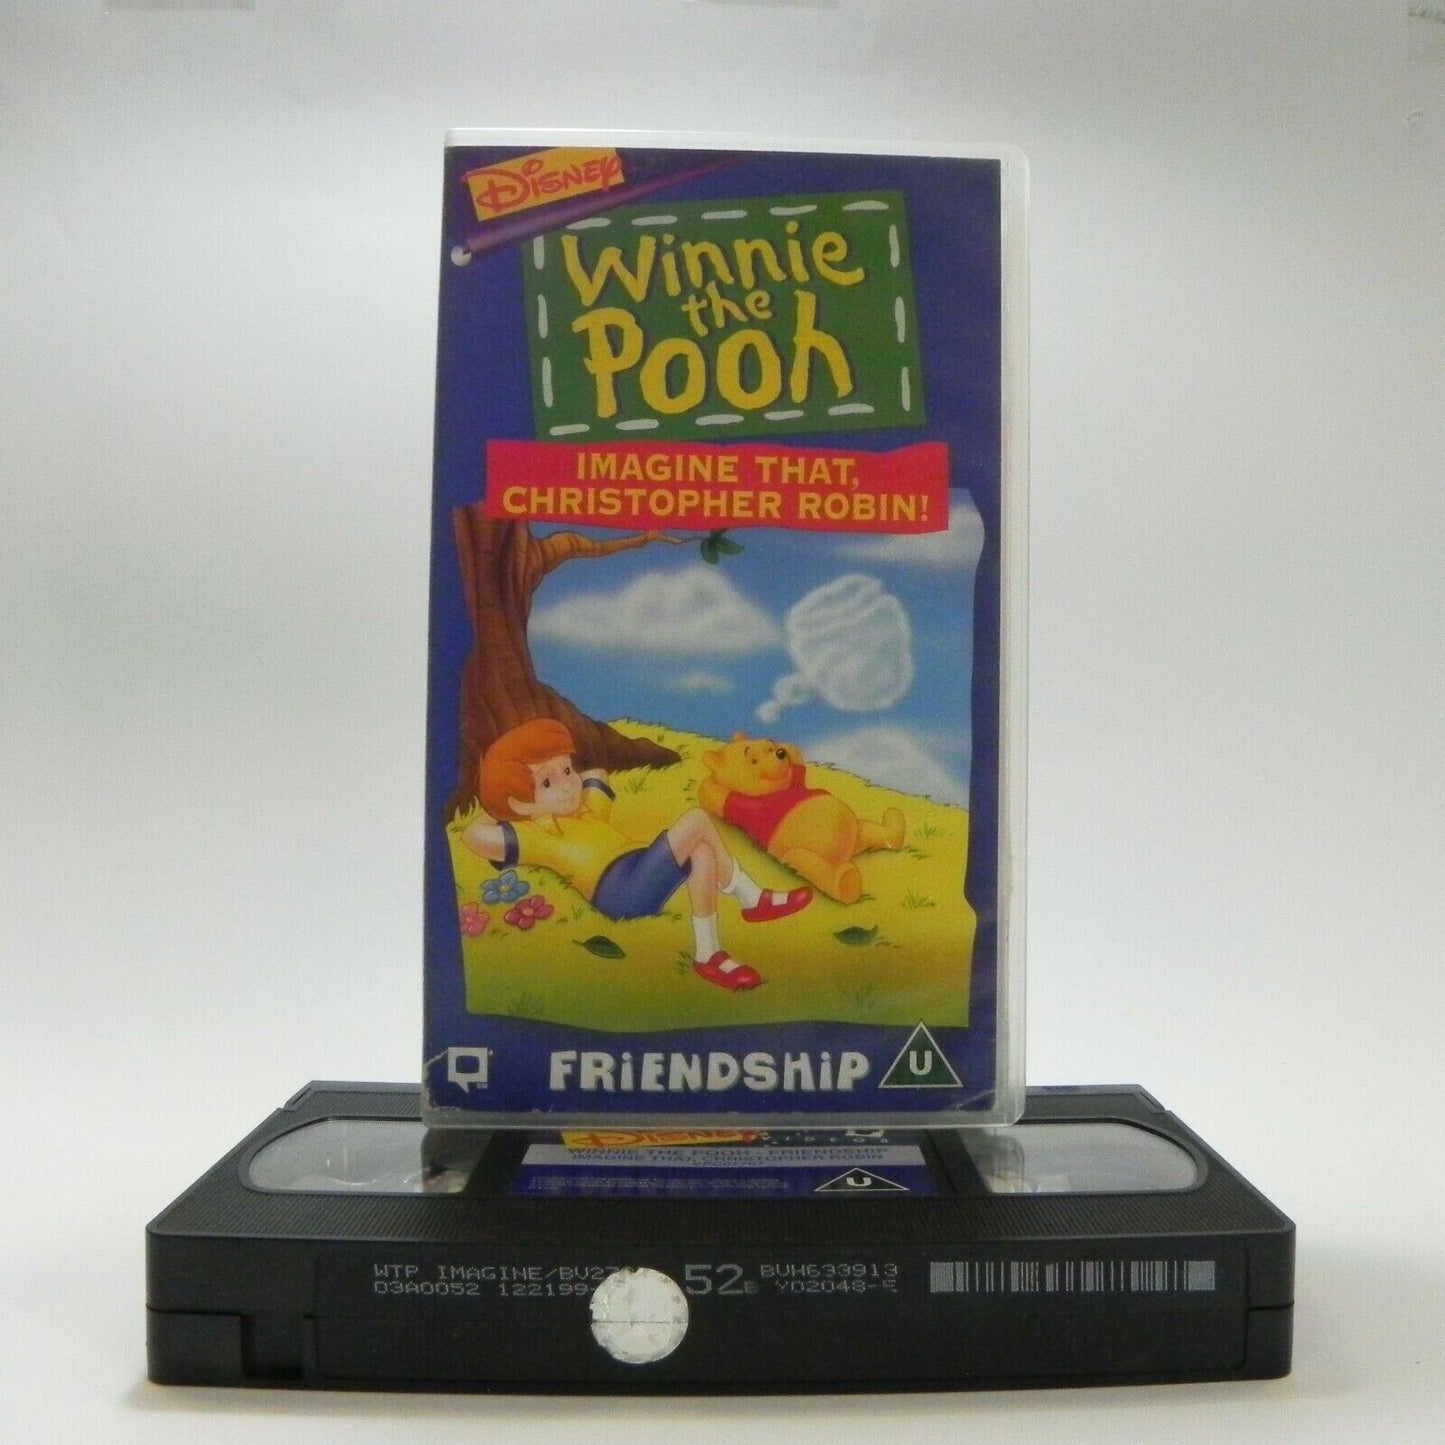 Winnie The Pooh: Imagine That, Christopher Robin! - Frendship - Children's - VHS-